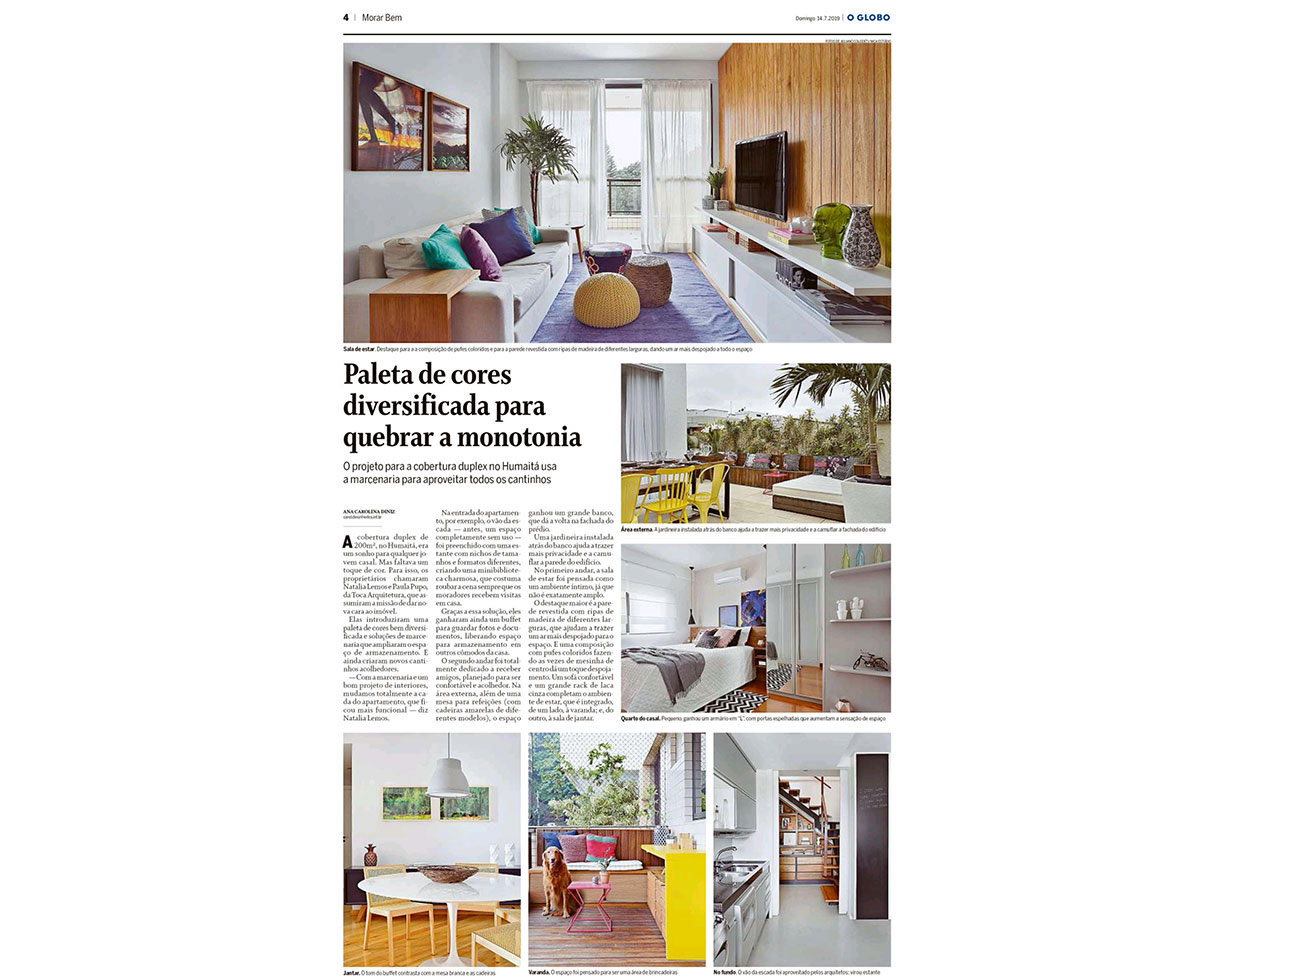 natalia-lemos-arquitetura-072019-jornal-oglobo-01